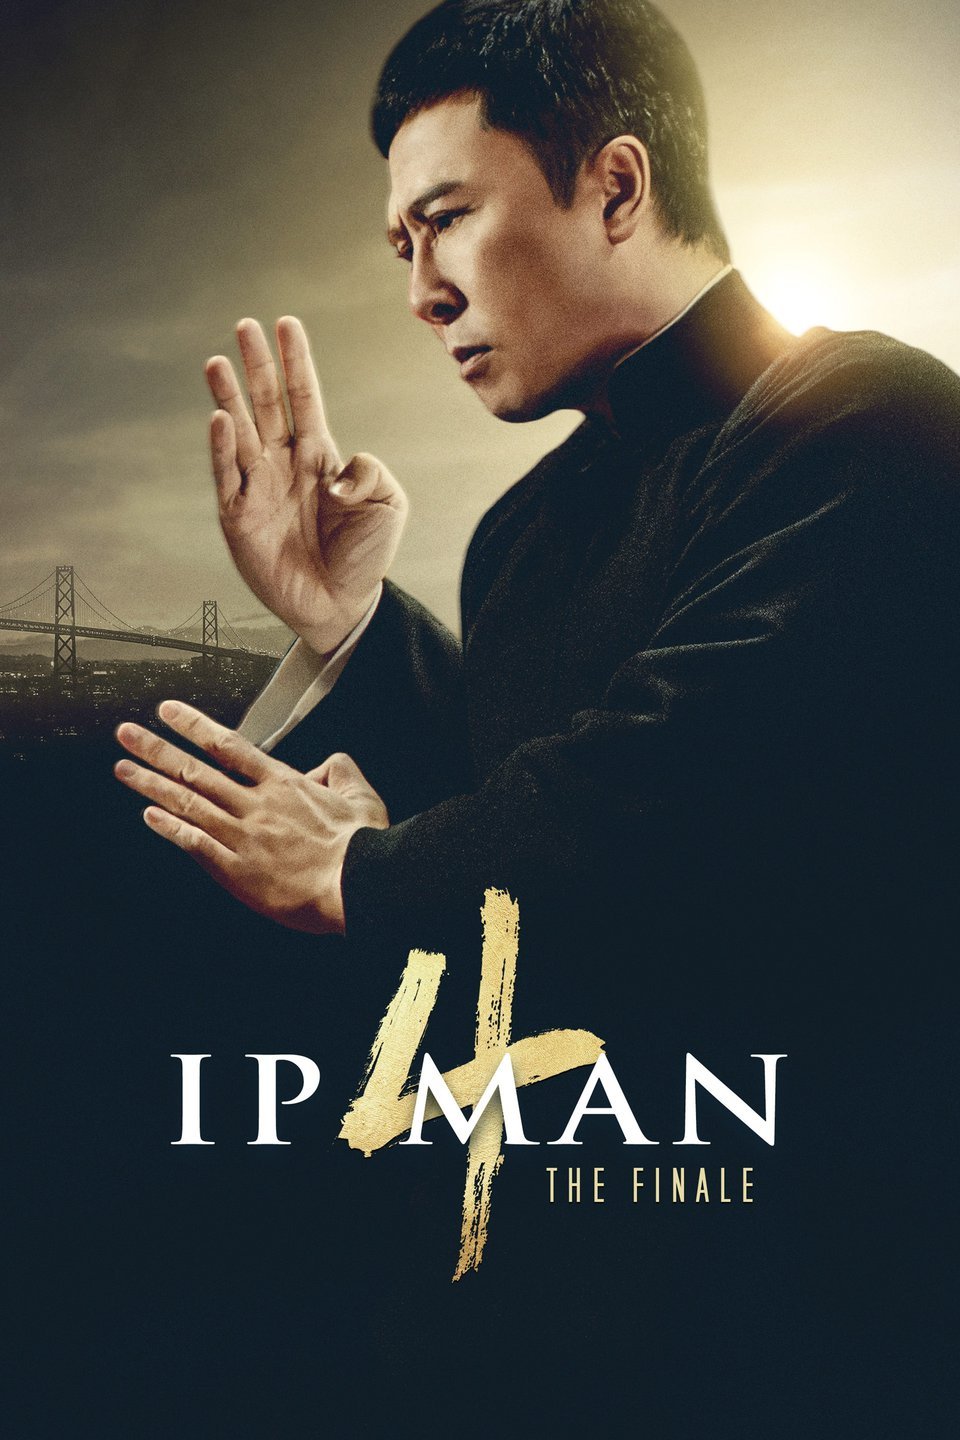 [MINI Super-HQ] Ip Man 4: The Finale (2019) ยิปมัน ภาค 4 [1080p] [พากย์ไทย 5.1 + เสียงจีน DTS] [บรรยายไทย + อังกฤษ] [เสียงไทย + ซับไทย] [PANDAFILE]